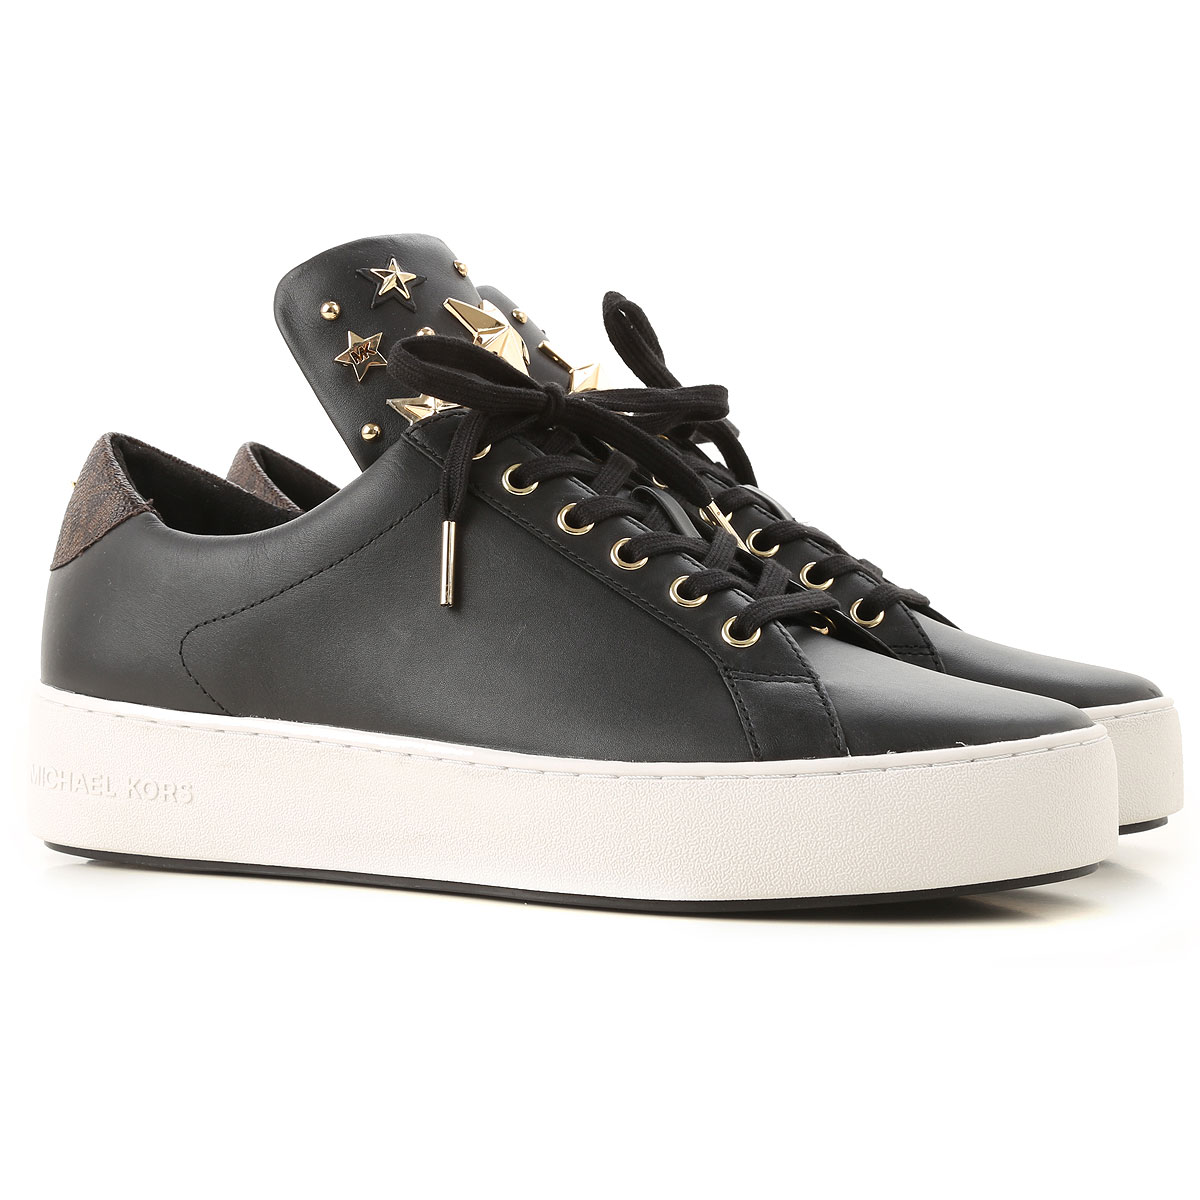 Womens Shoes Michael Kors, Style code: 43r9mnfs7l-black-